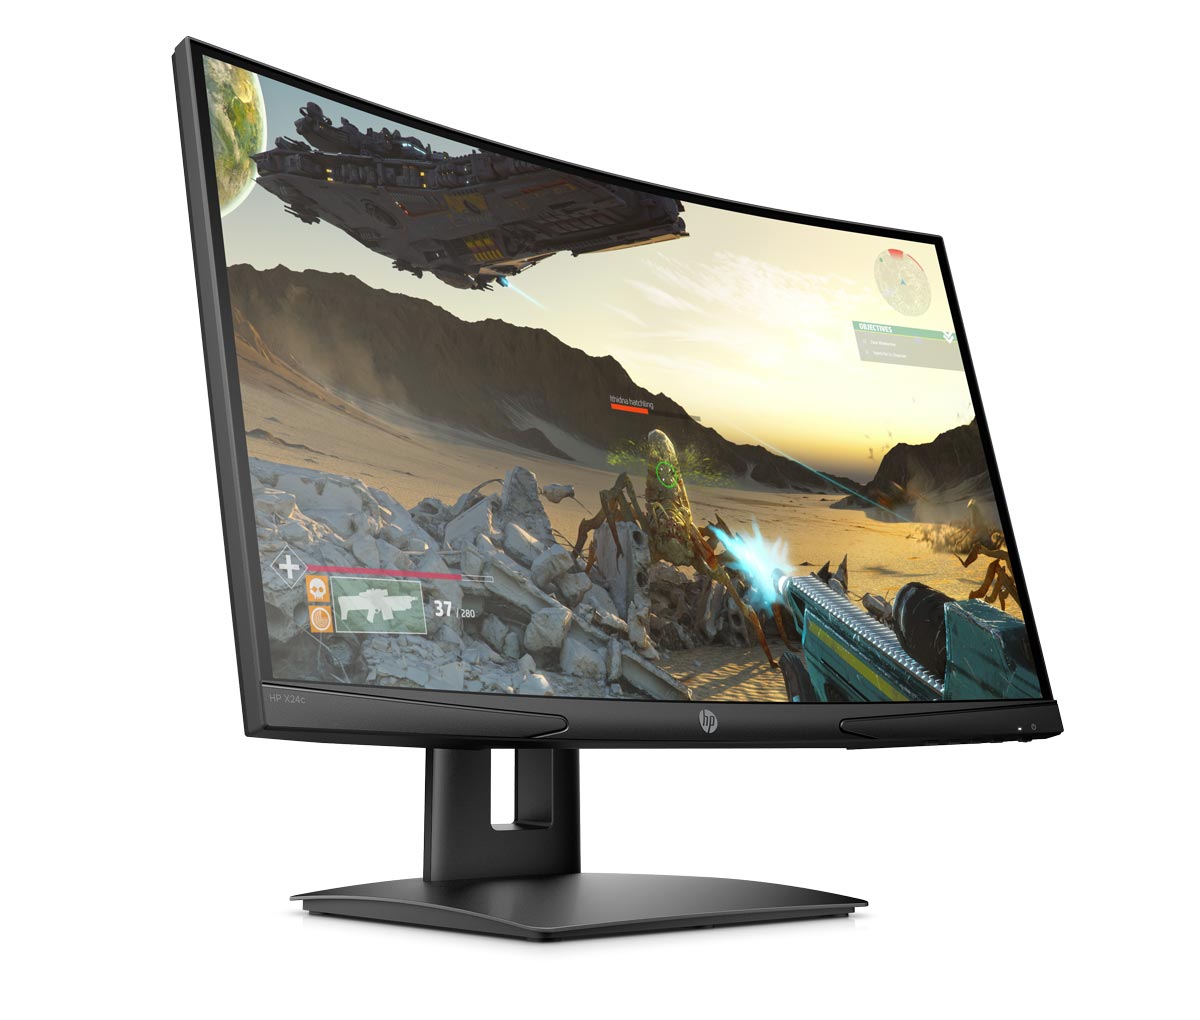 The HP X24c Gaming Monitor